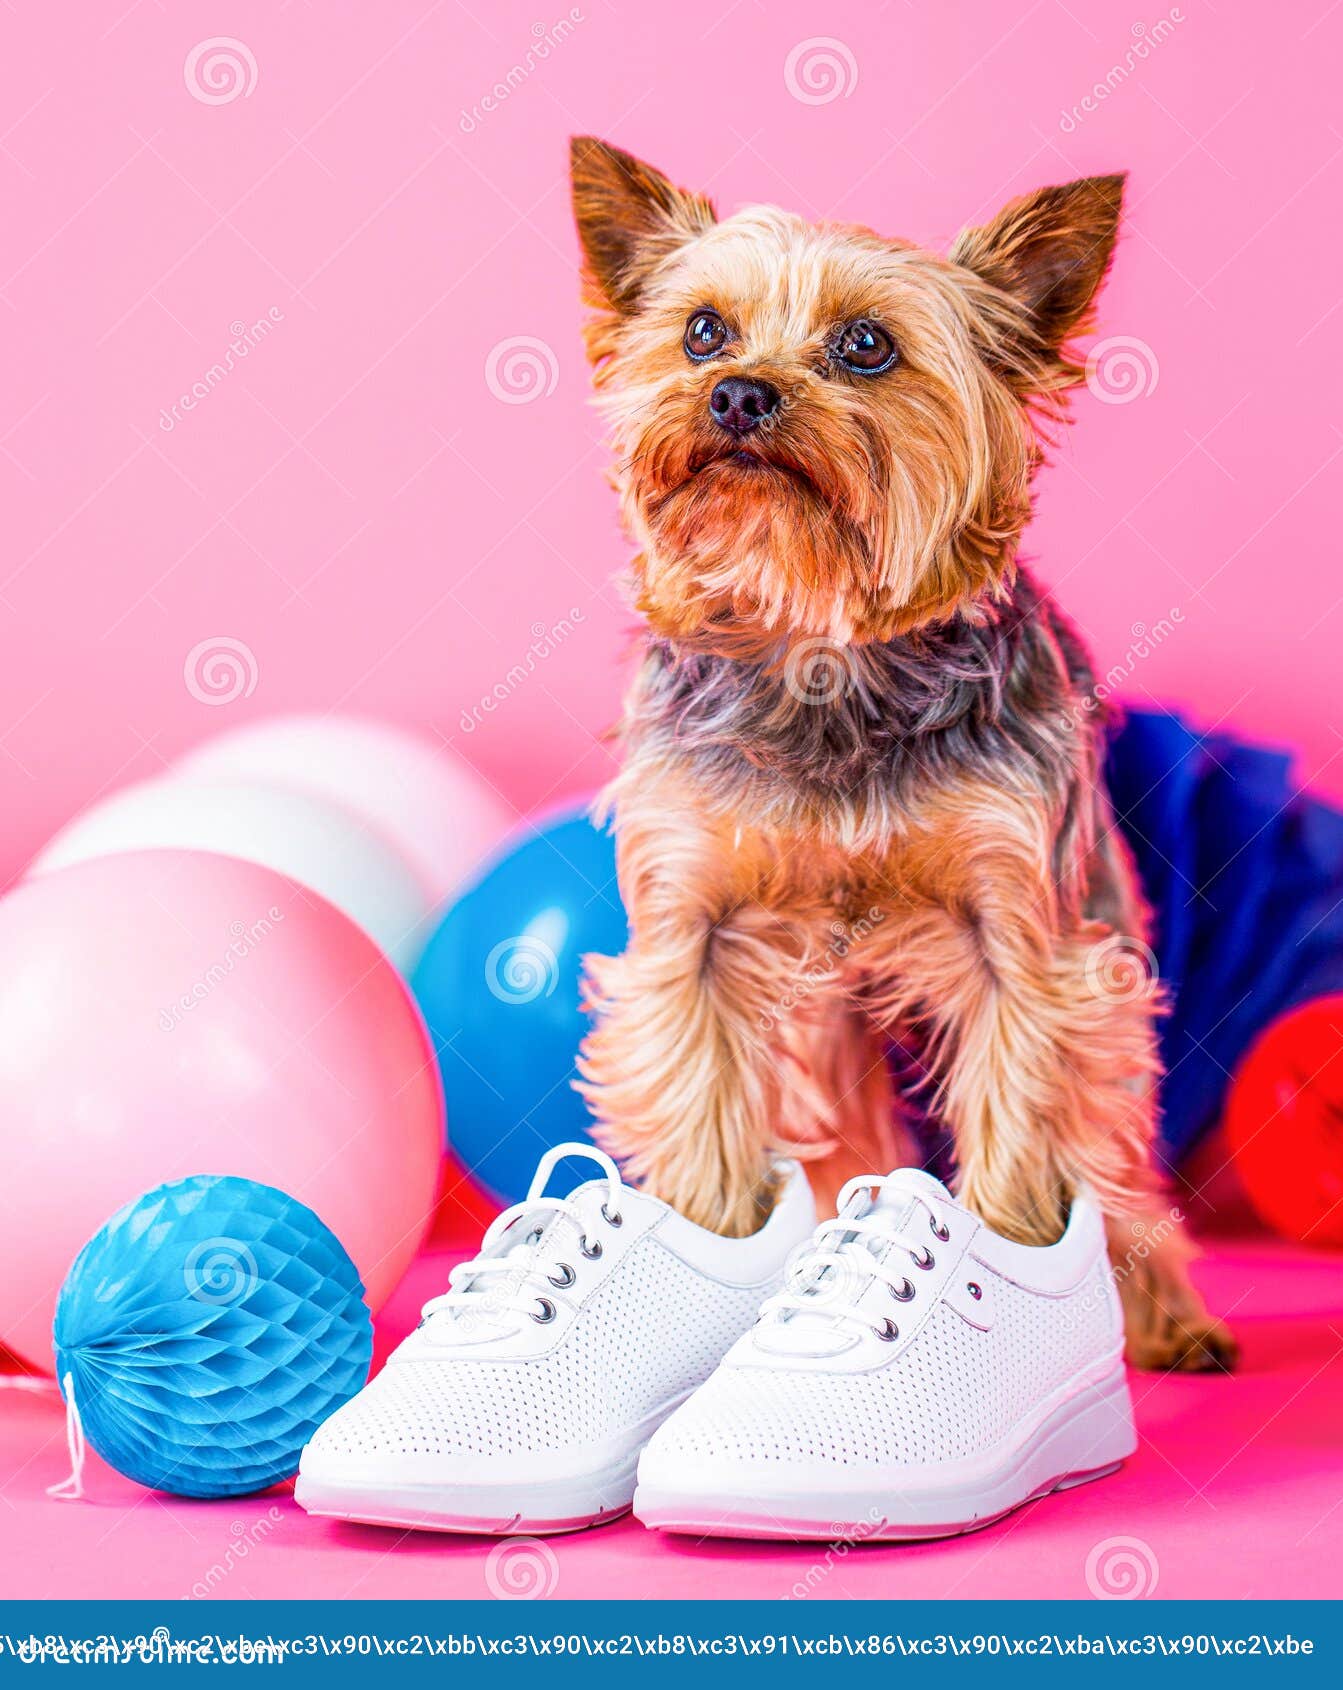 how do you teach a dog to wear shoes